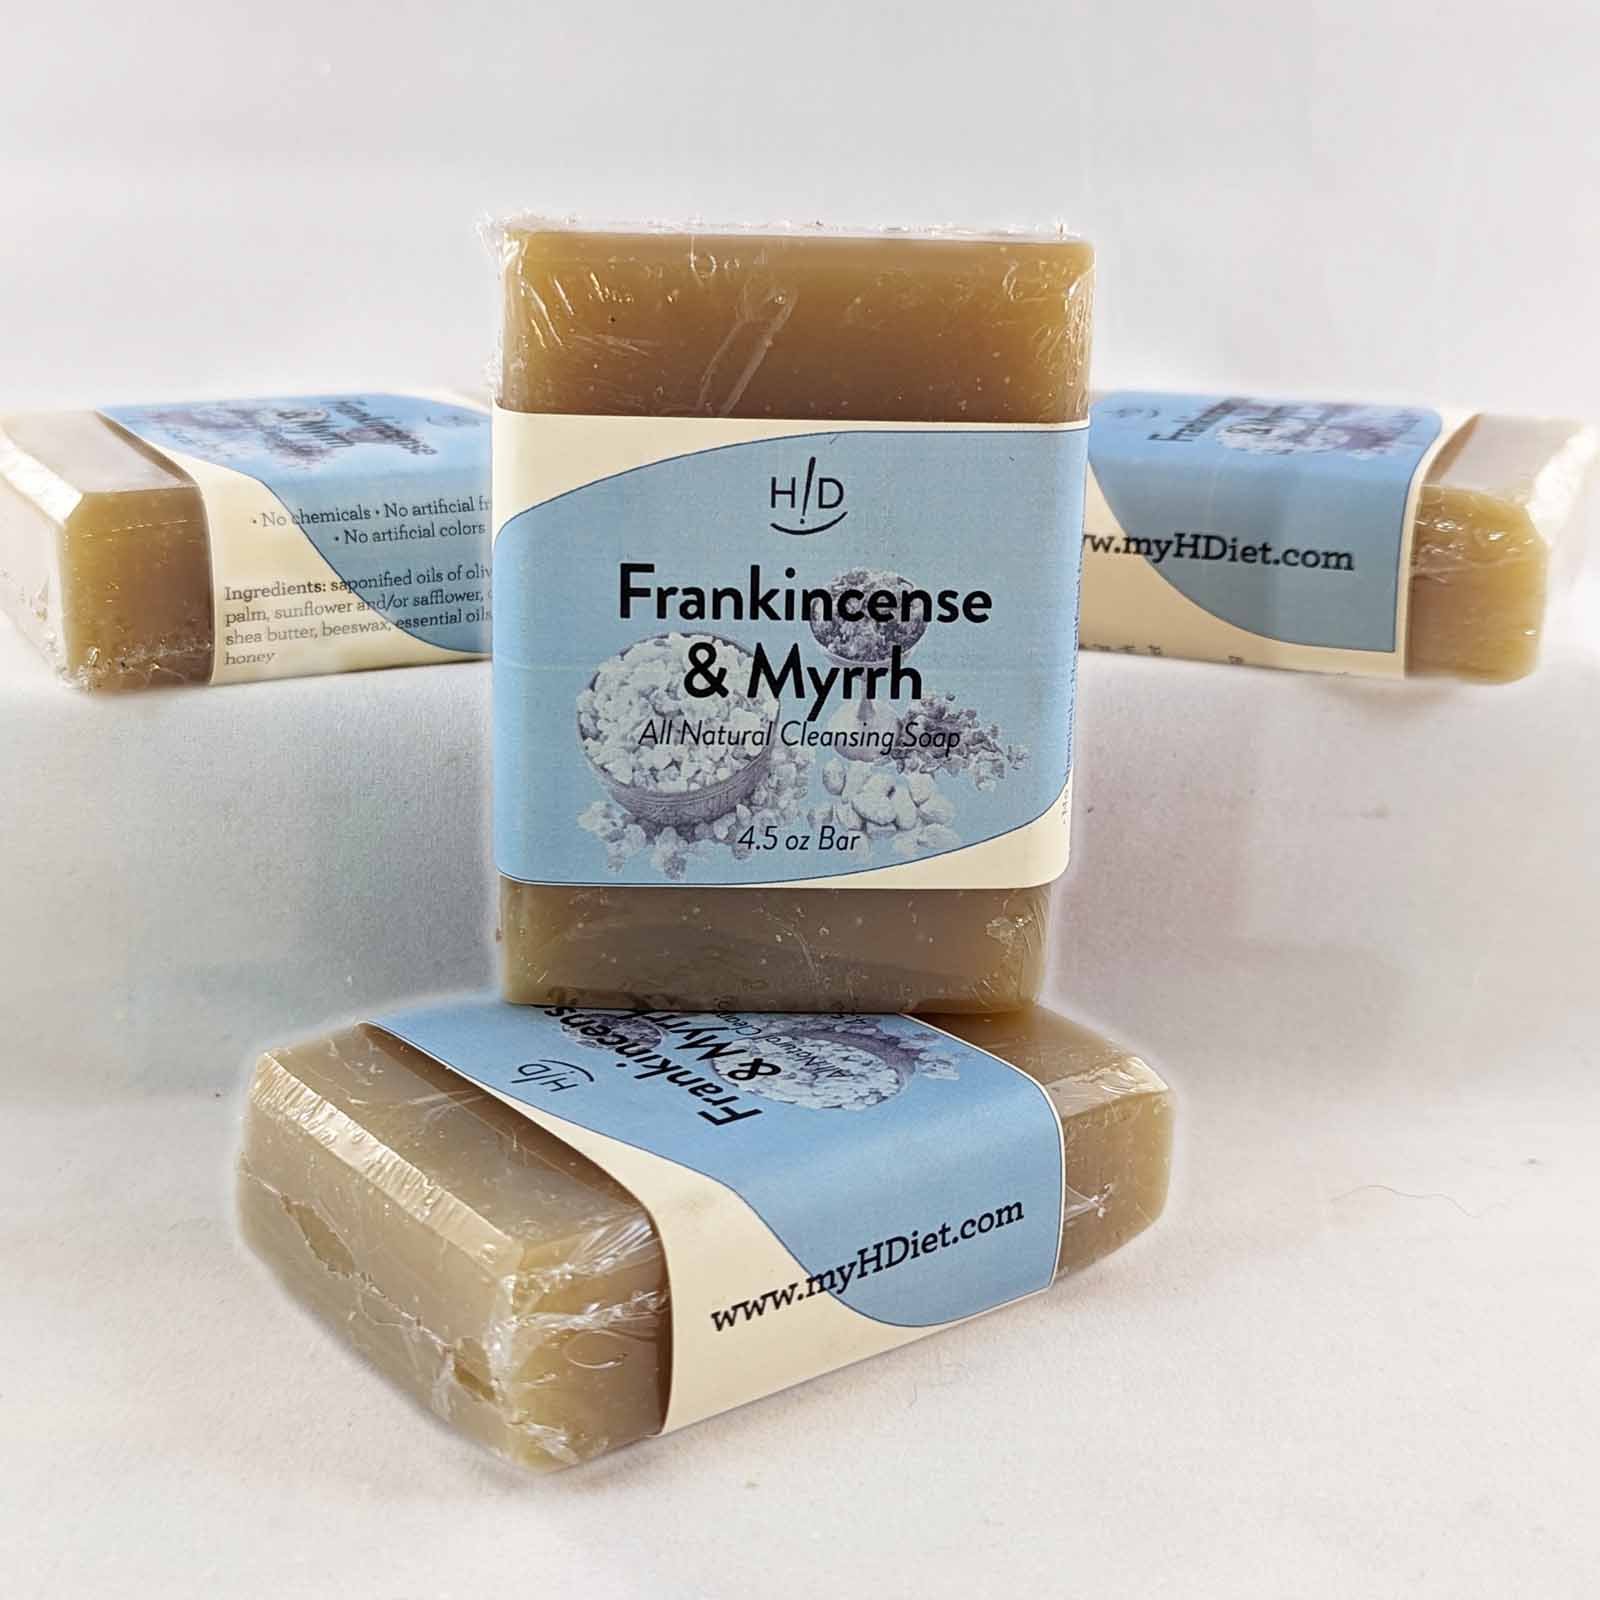 Frankincense and Myrrh Soap